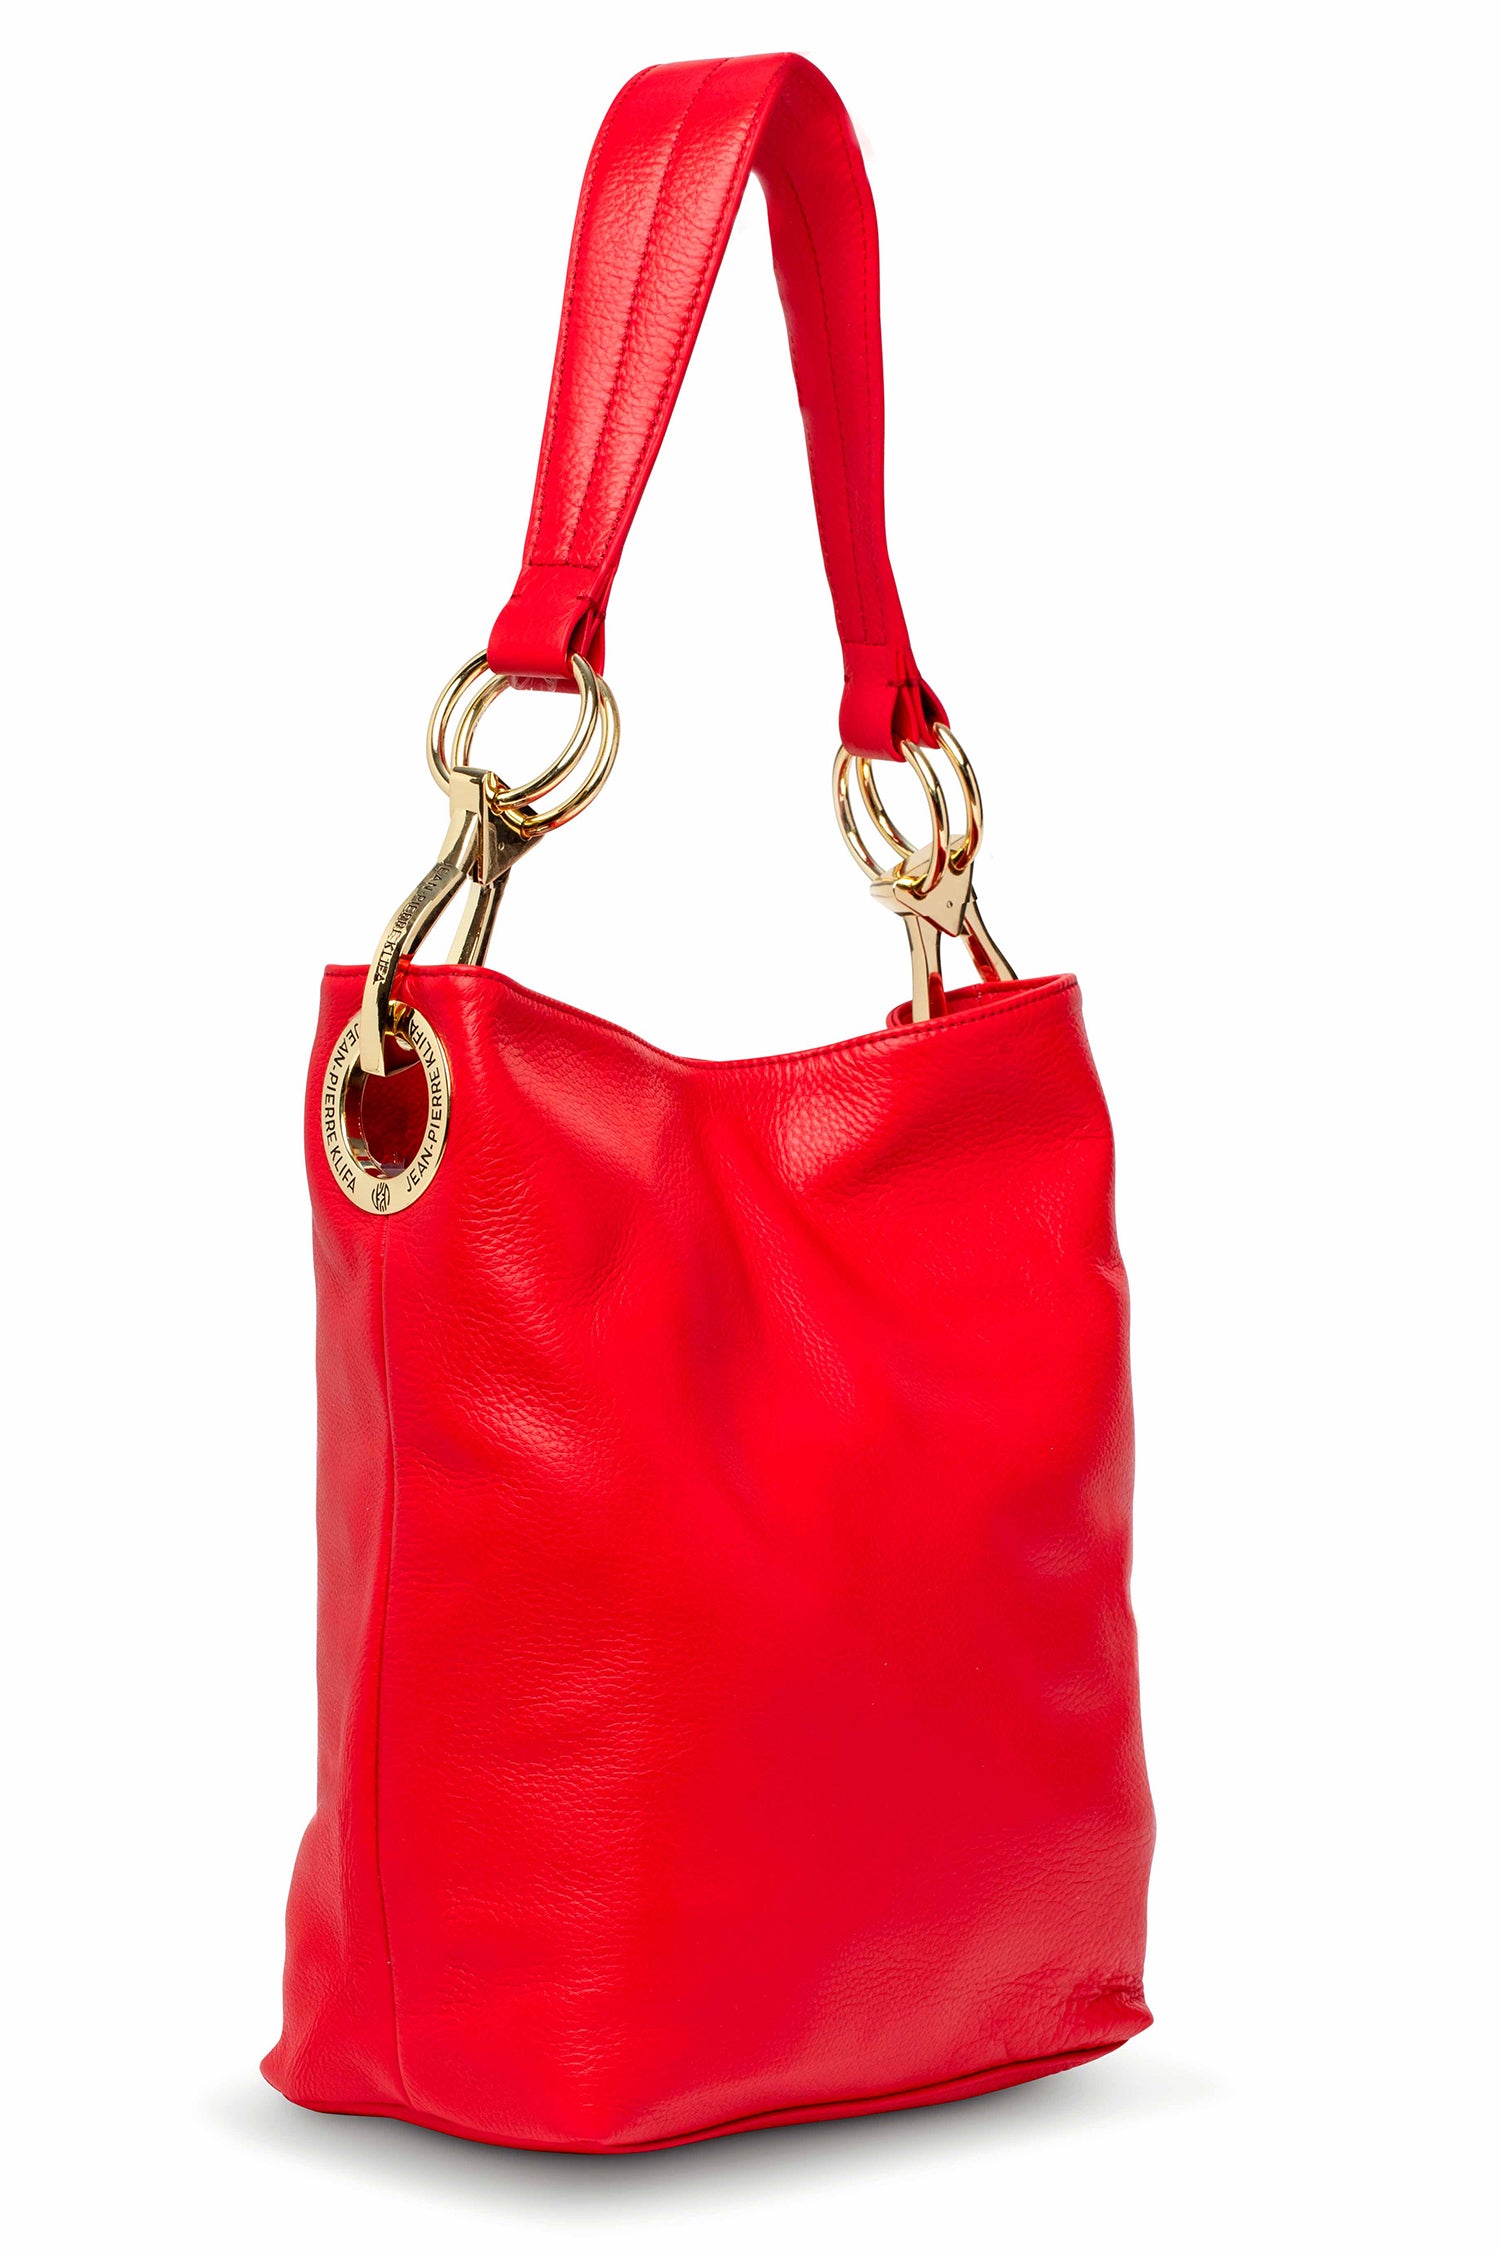 Leather Bucket Bag Red Handbag Jean-Pierre Klifa   